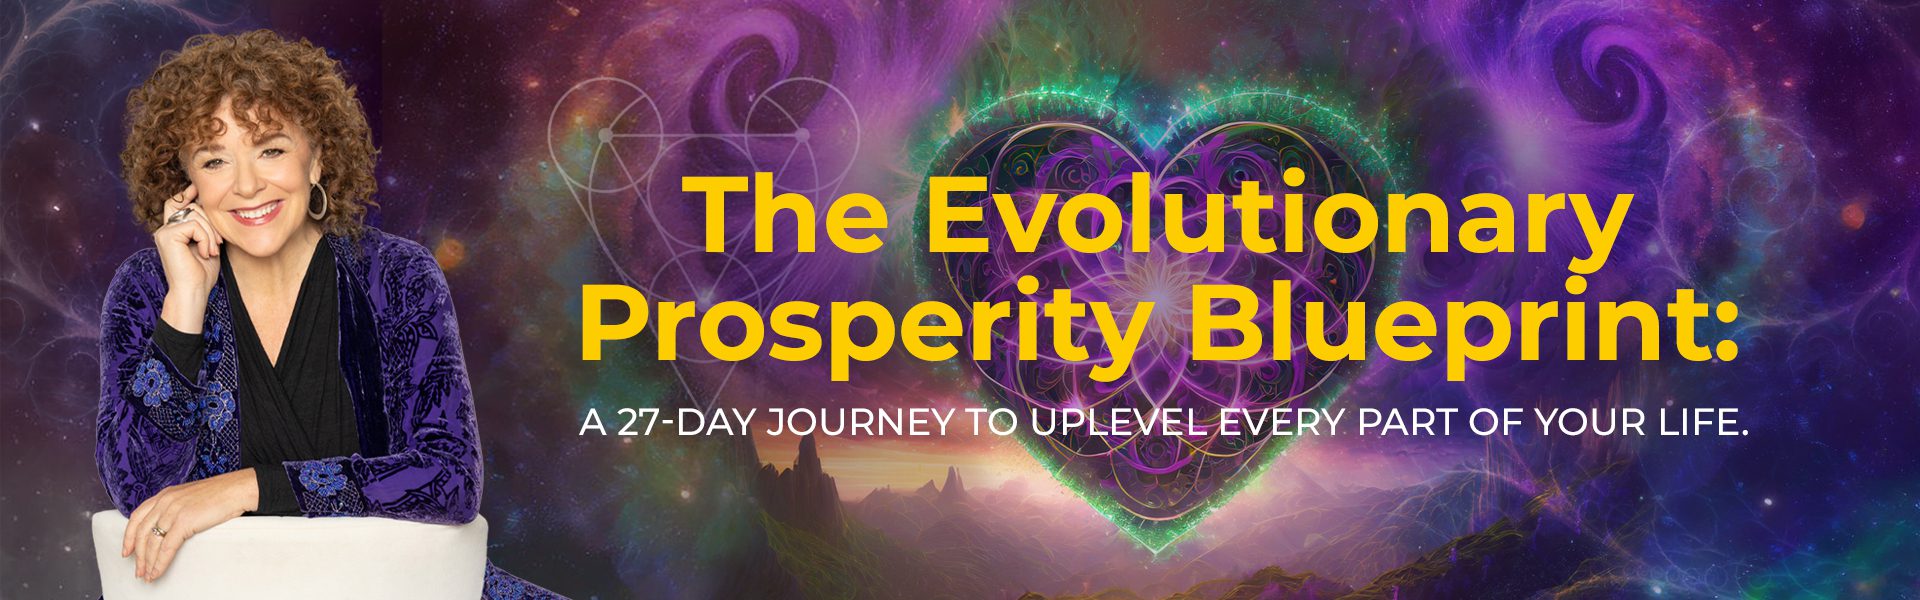 Evolutionary Prosperity Blueprint Header image of a heart